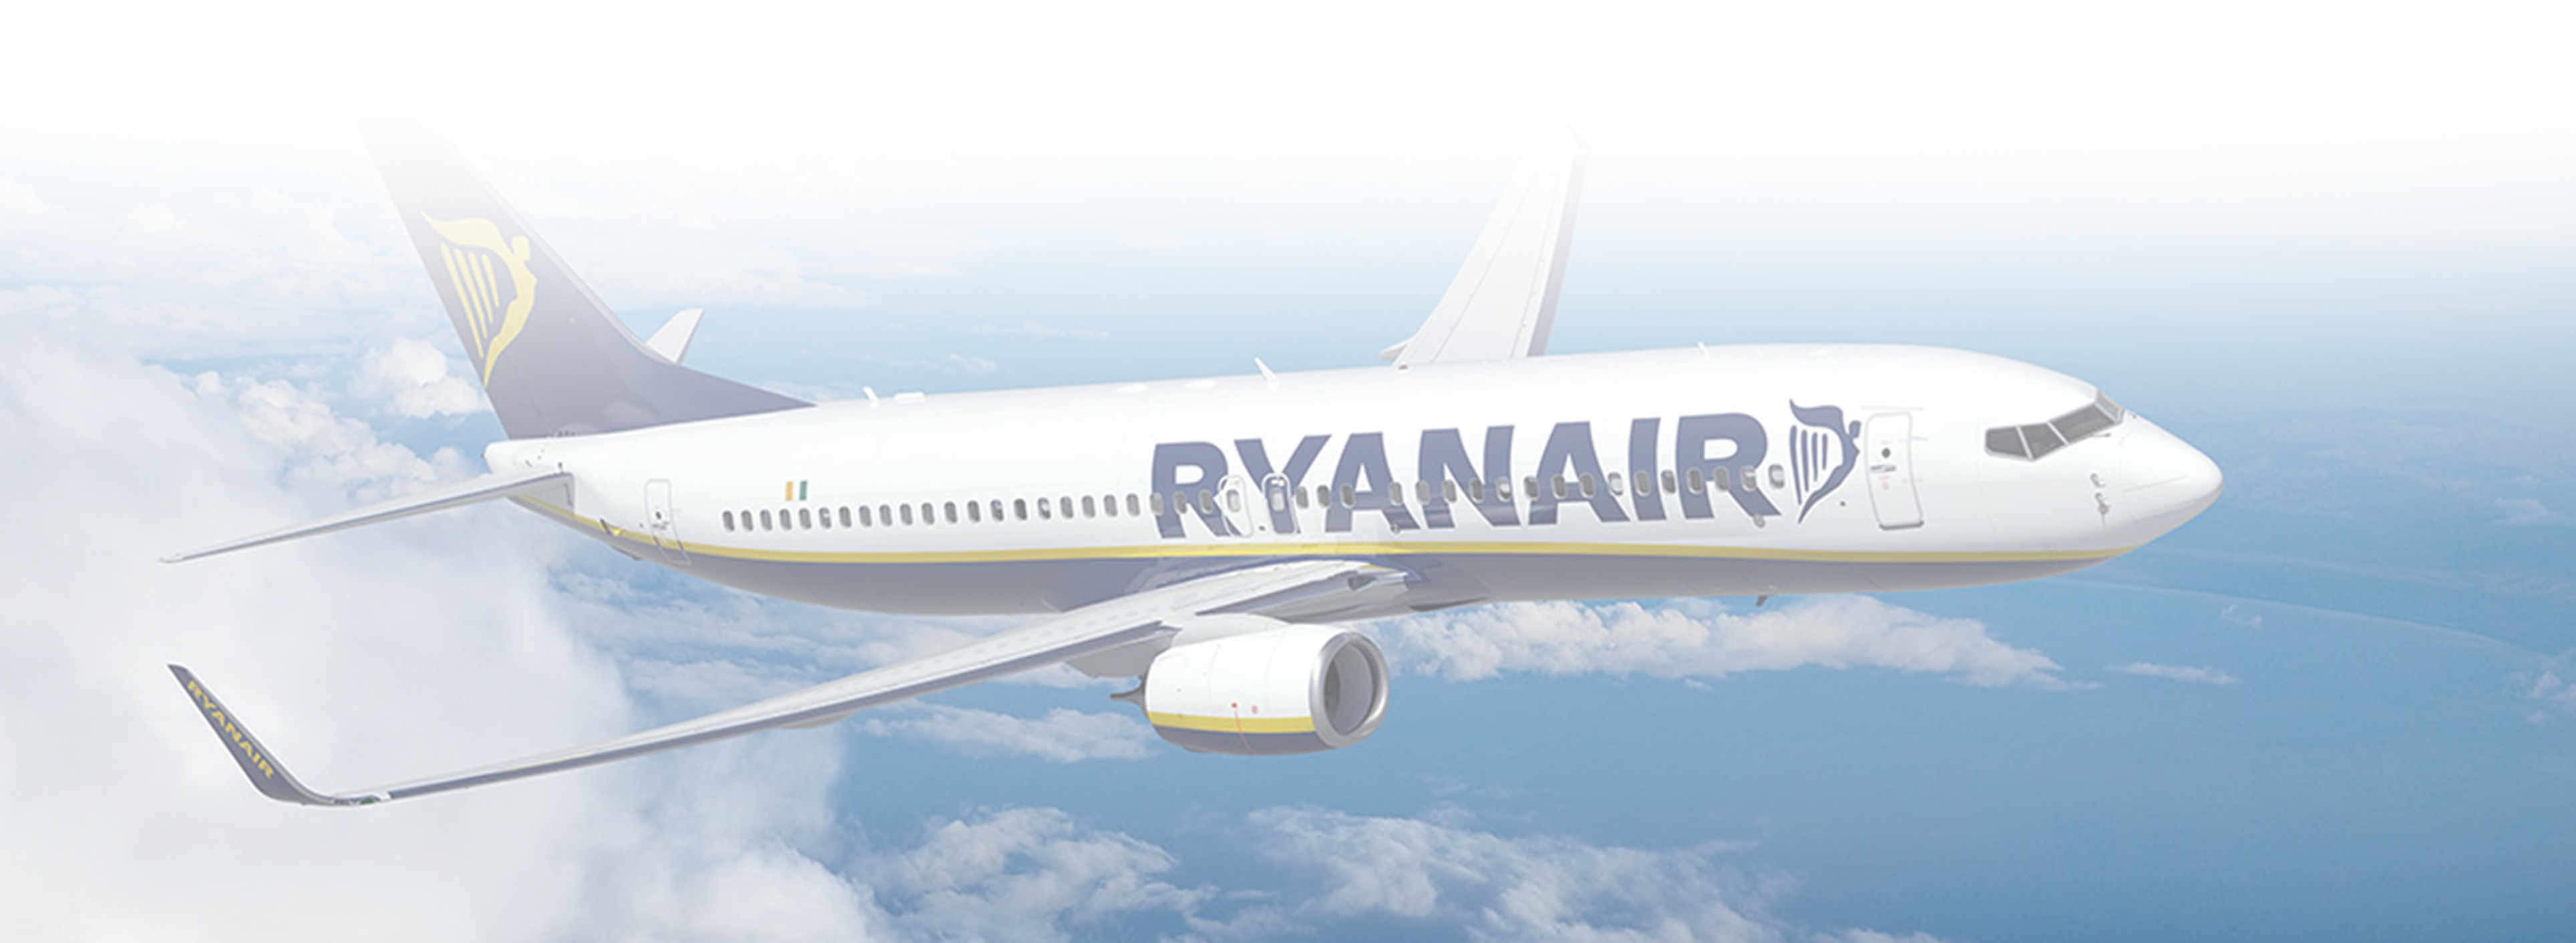 Ryanair aeroplane